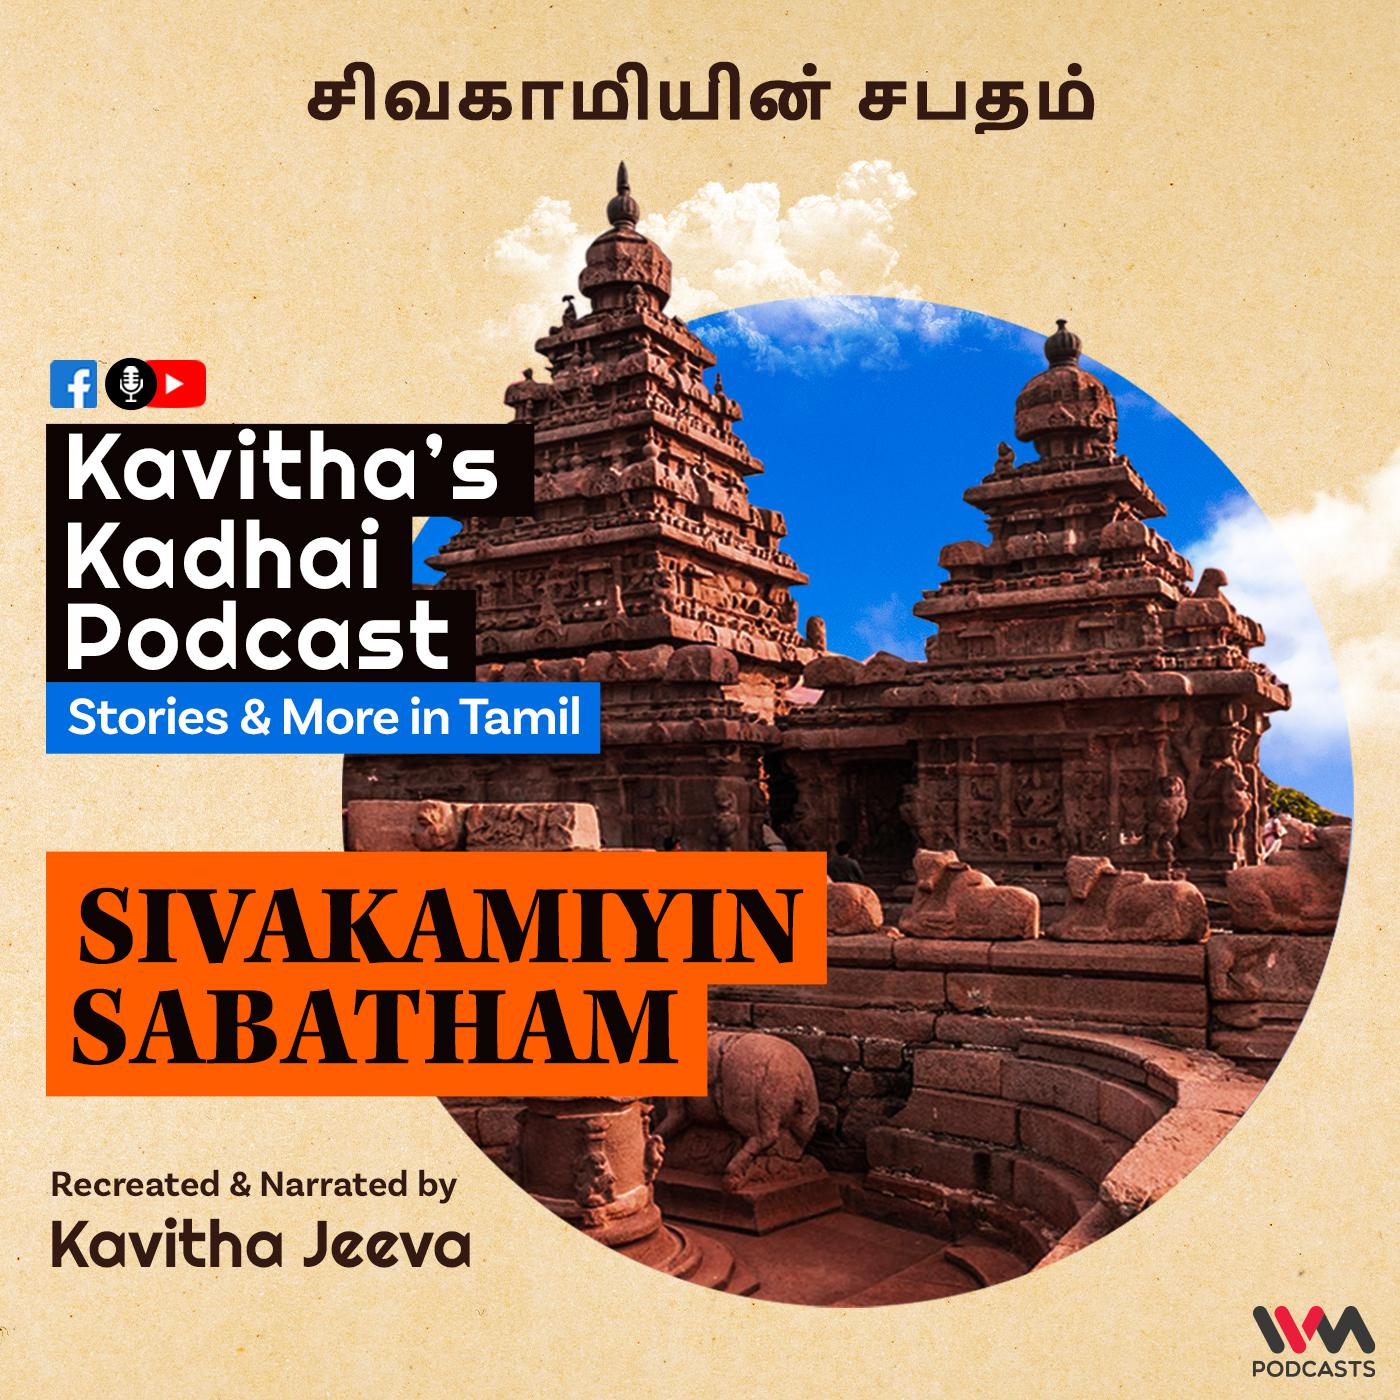 KadhaiPodcast’s Sivakamiyin Sabatham with Kavitha Jeeva - Episode #103